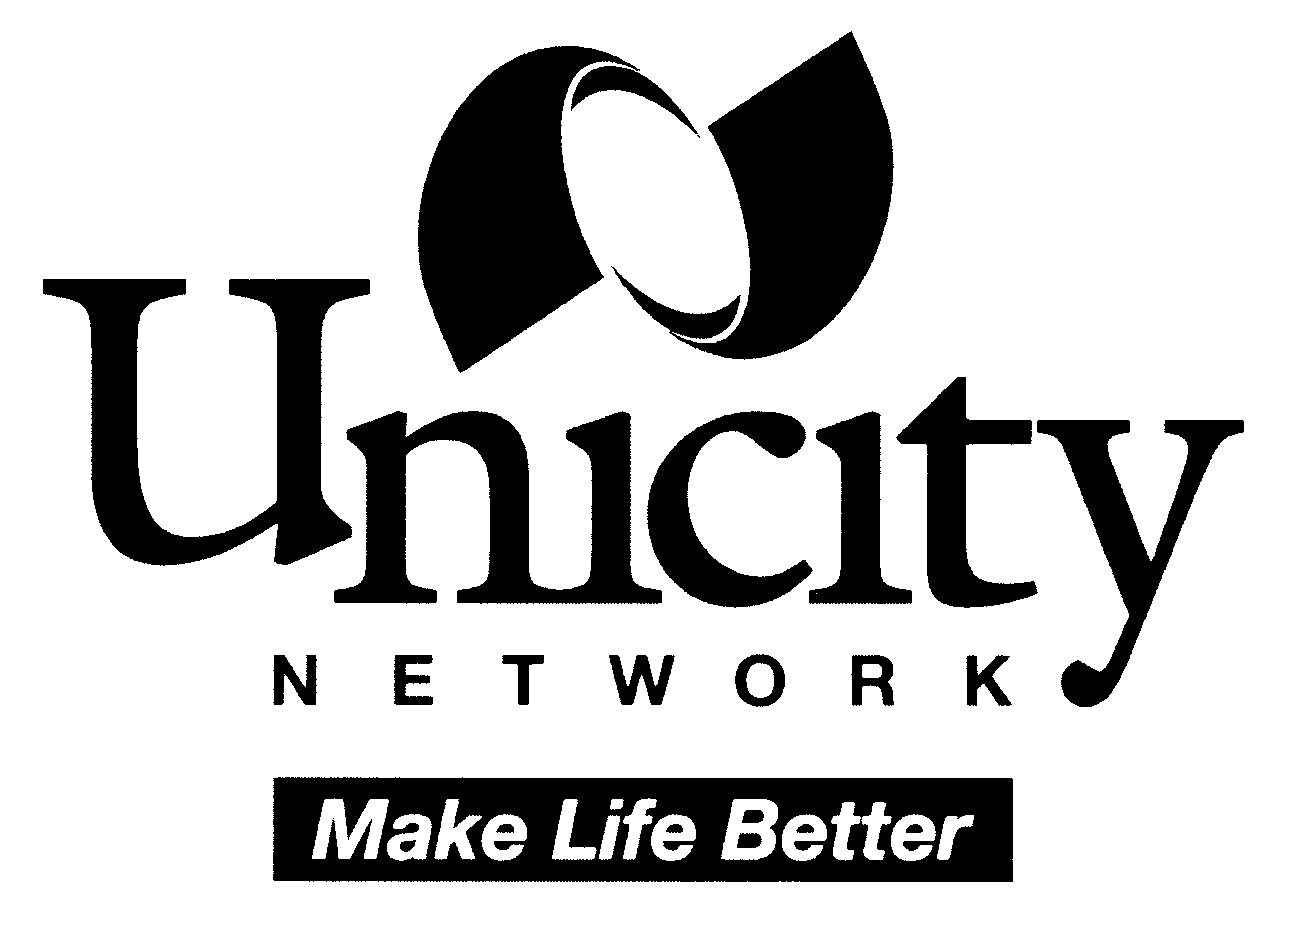  UNICITY NETWORK MAKE LIFE BETTER